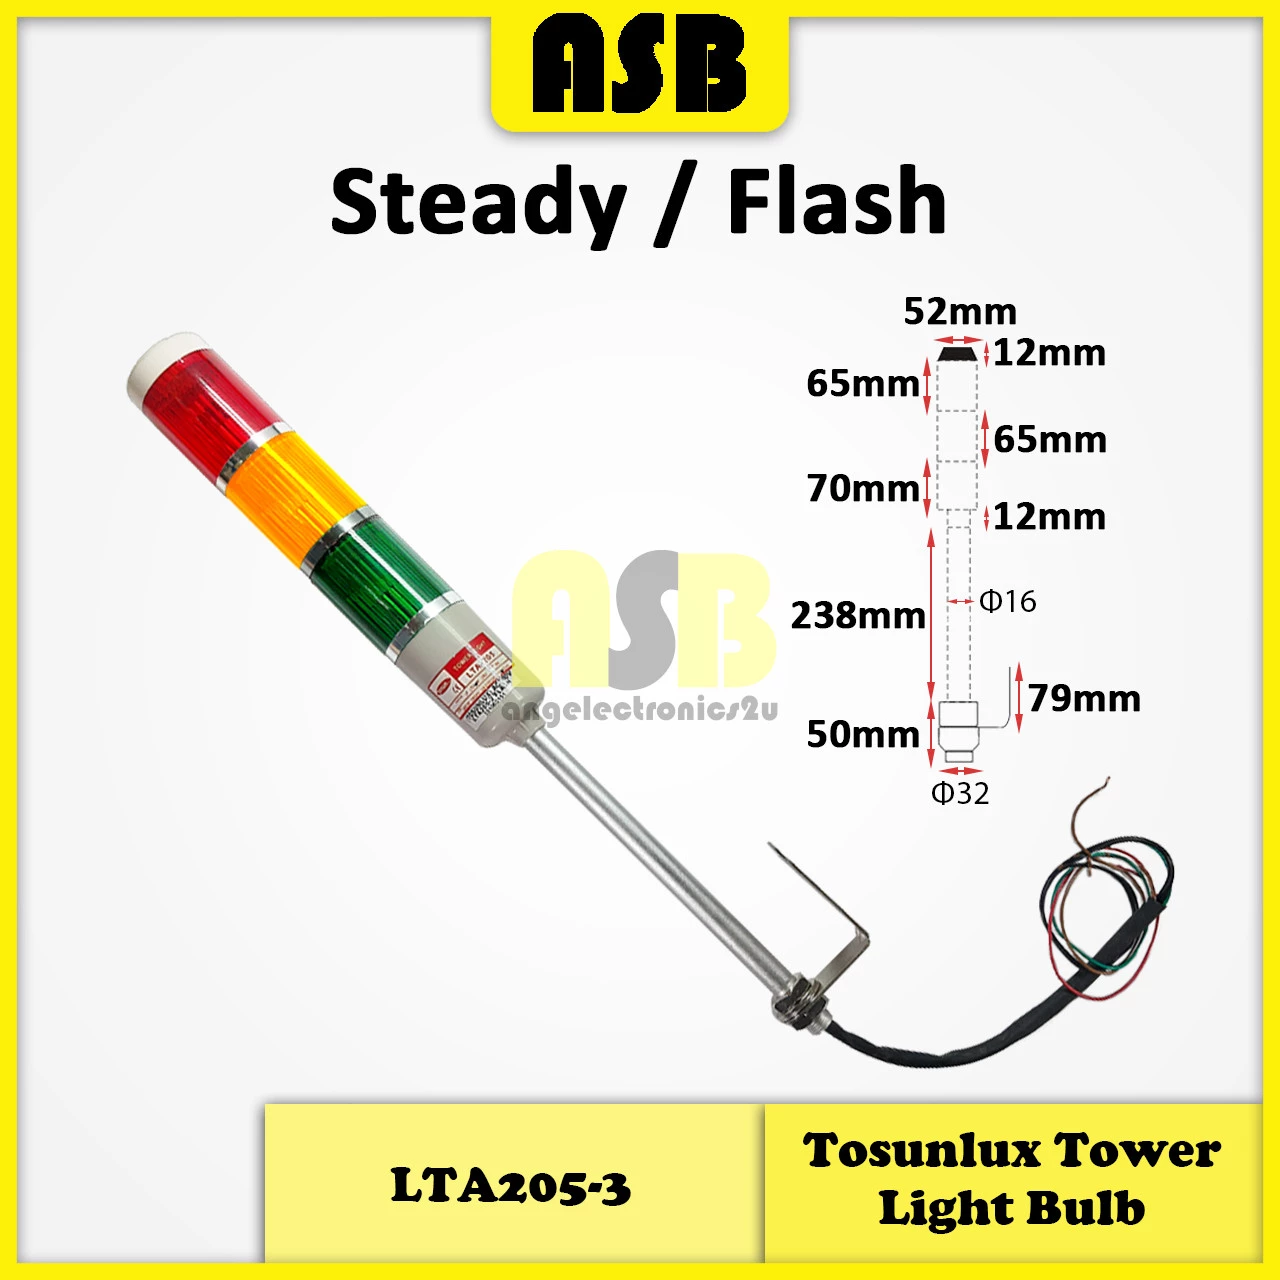 (1pc) Tosunlux Tower Light 3 Bulb LTA205-3 ( Steady / Flash )